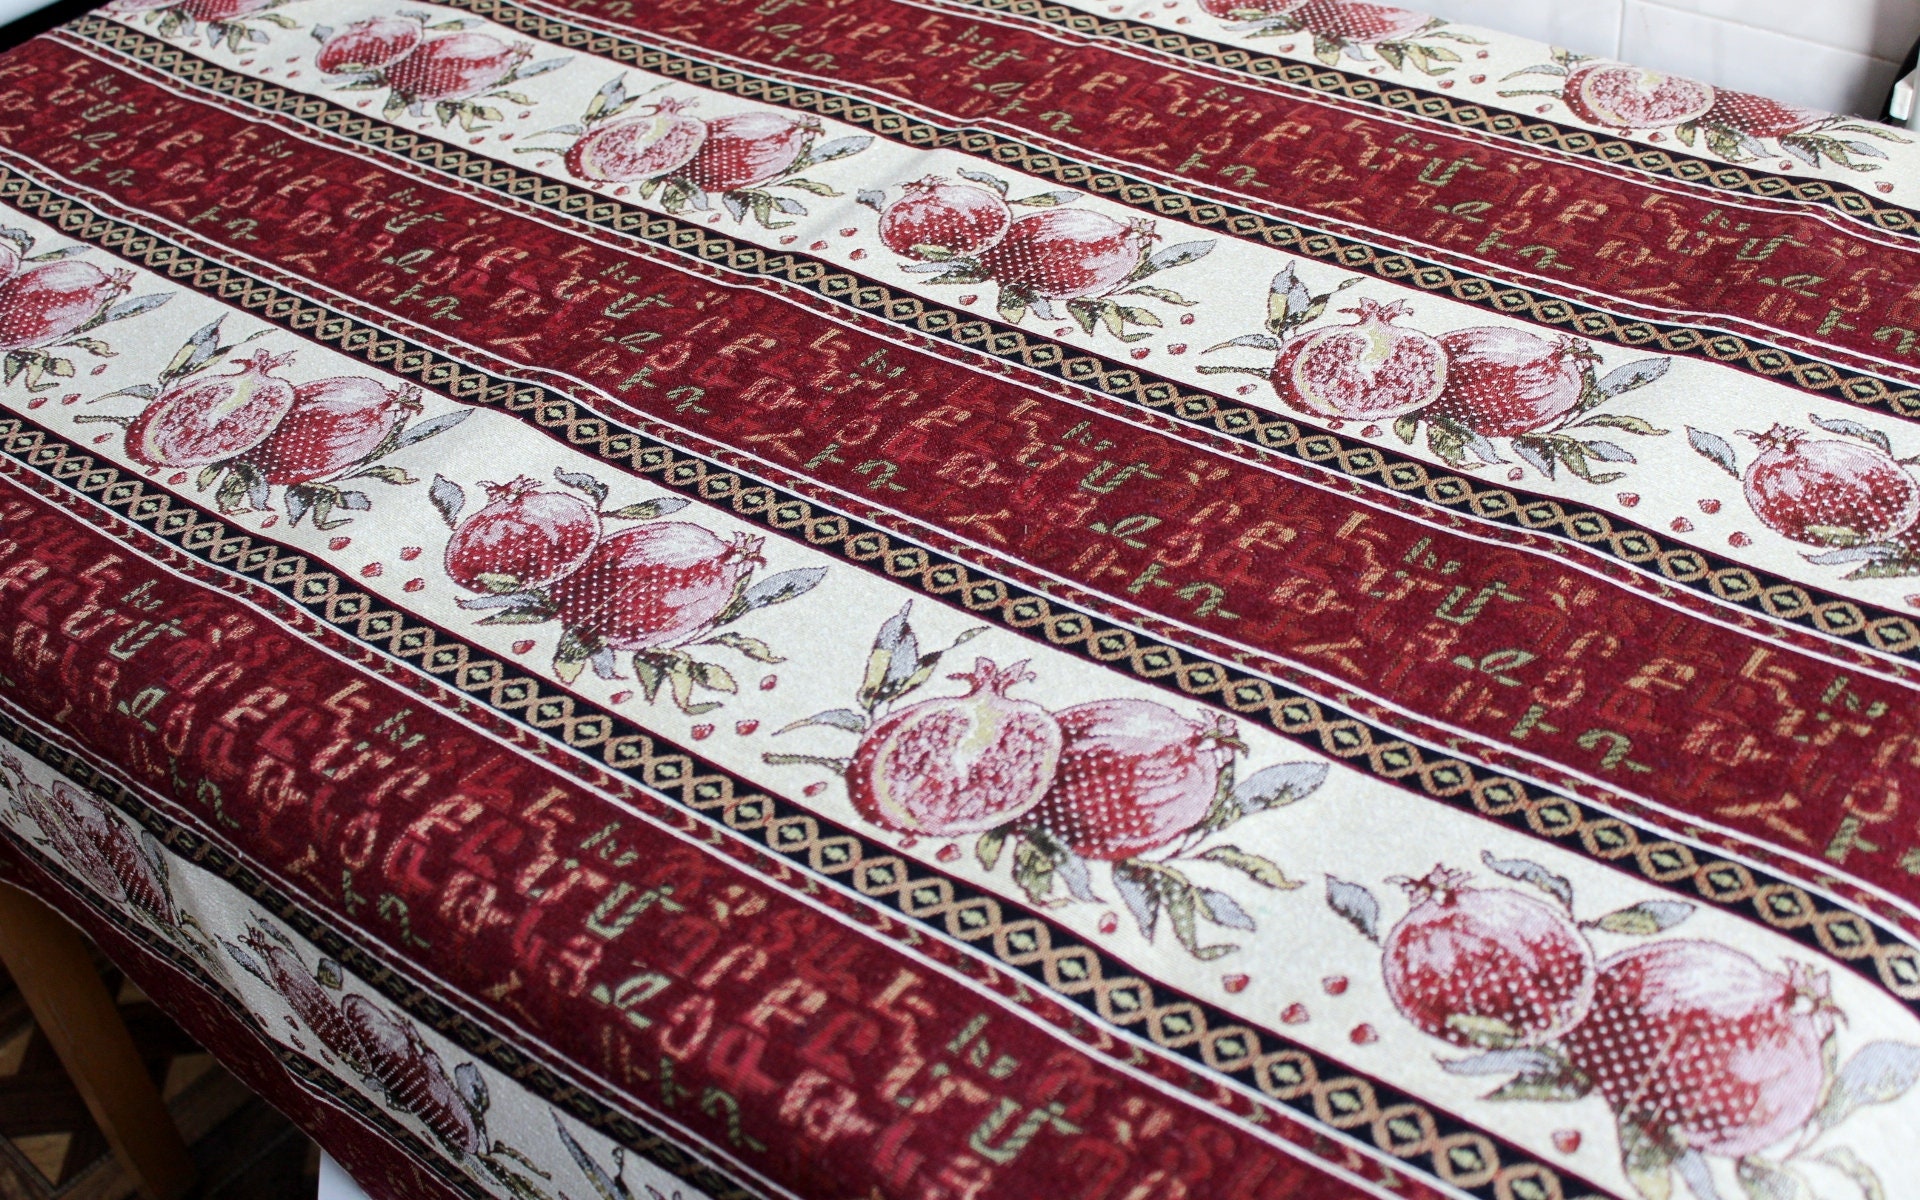 Armenian carpet narrow table cloth with pomegranates wine red color Carpet burgundy Cotton blend Ethnic Decor Armenian gifts housewarming